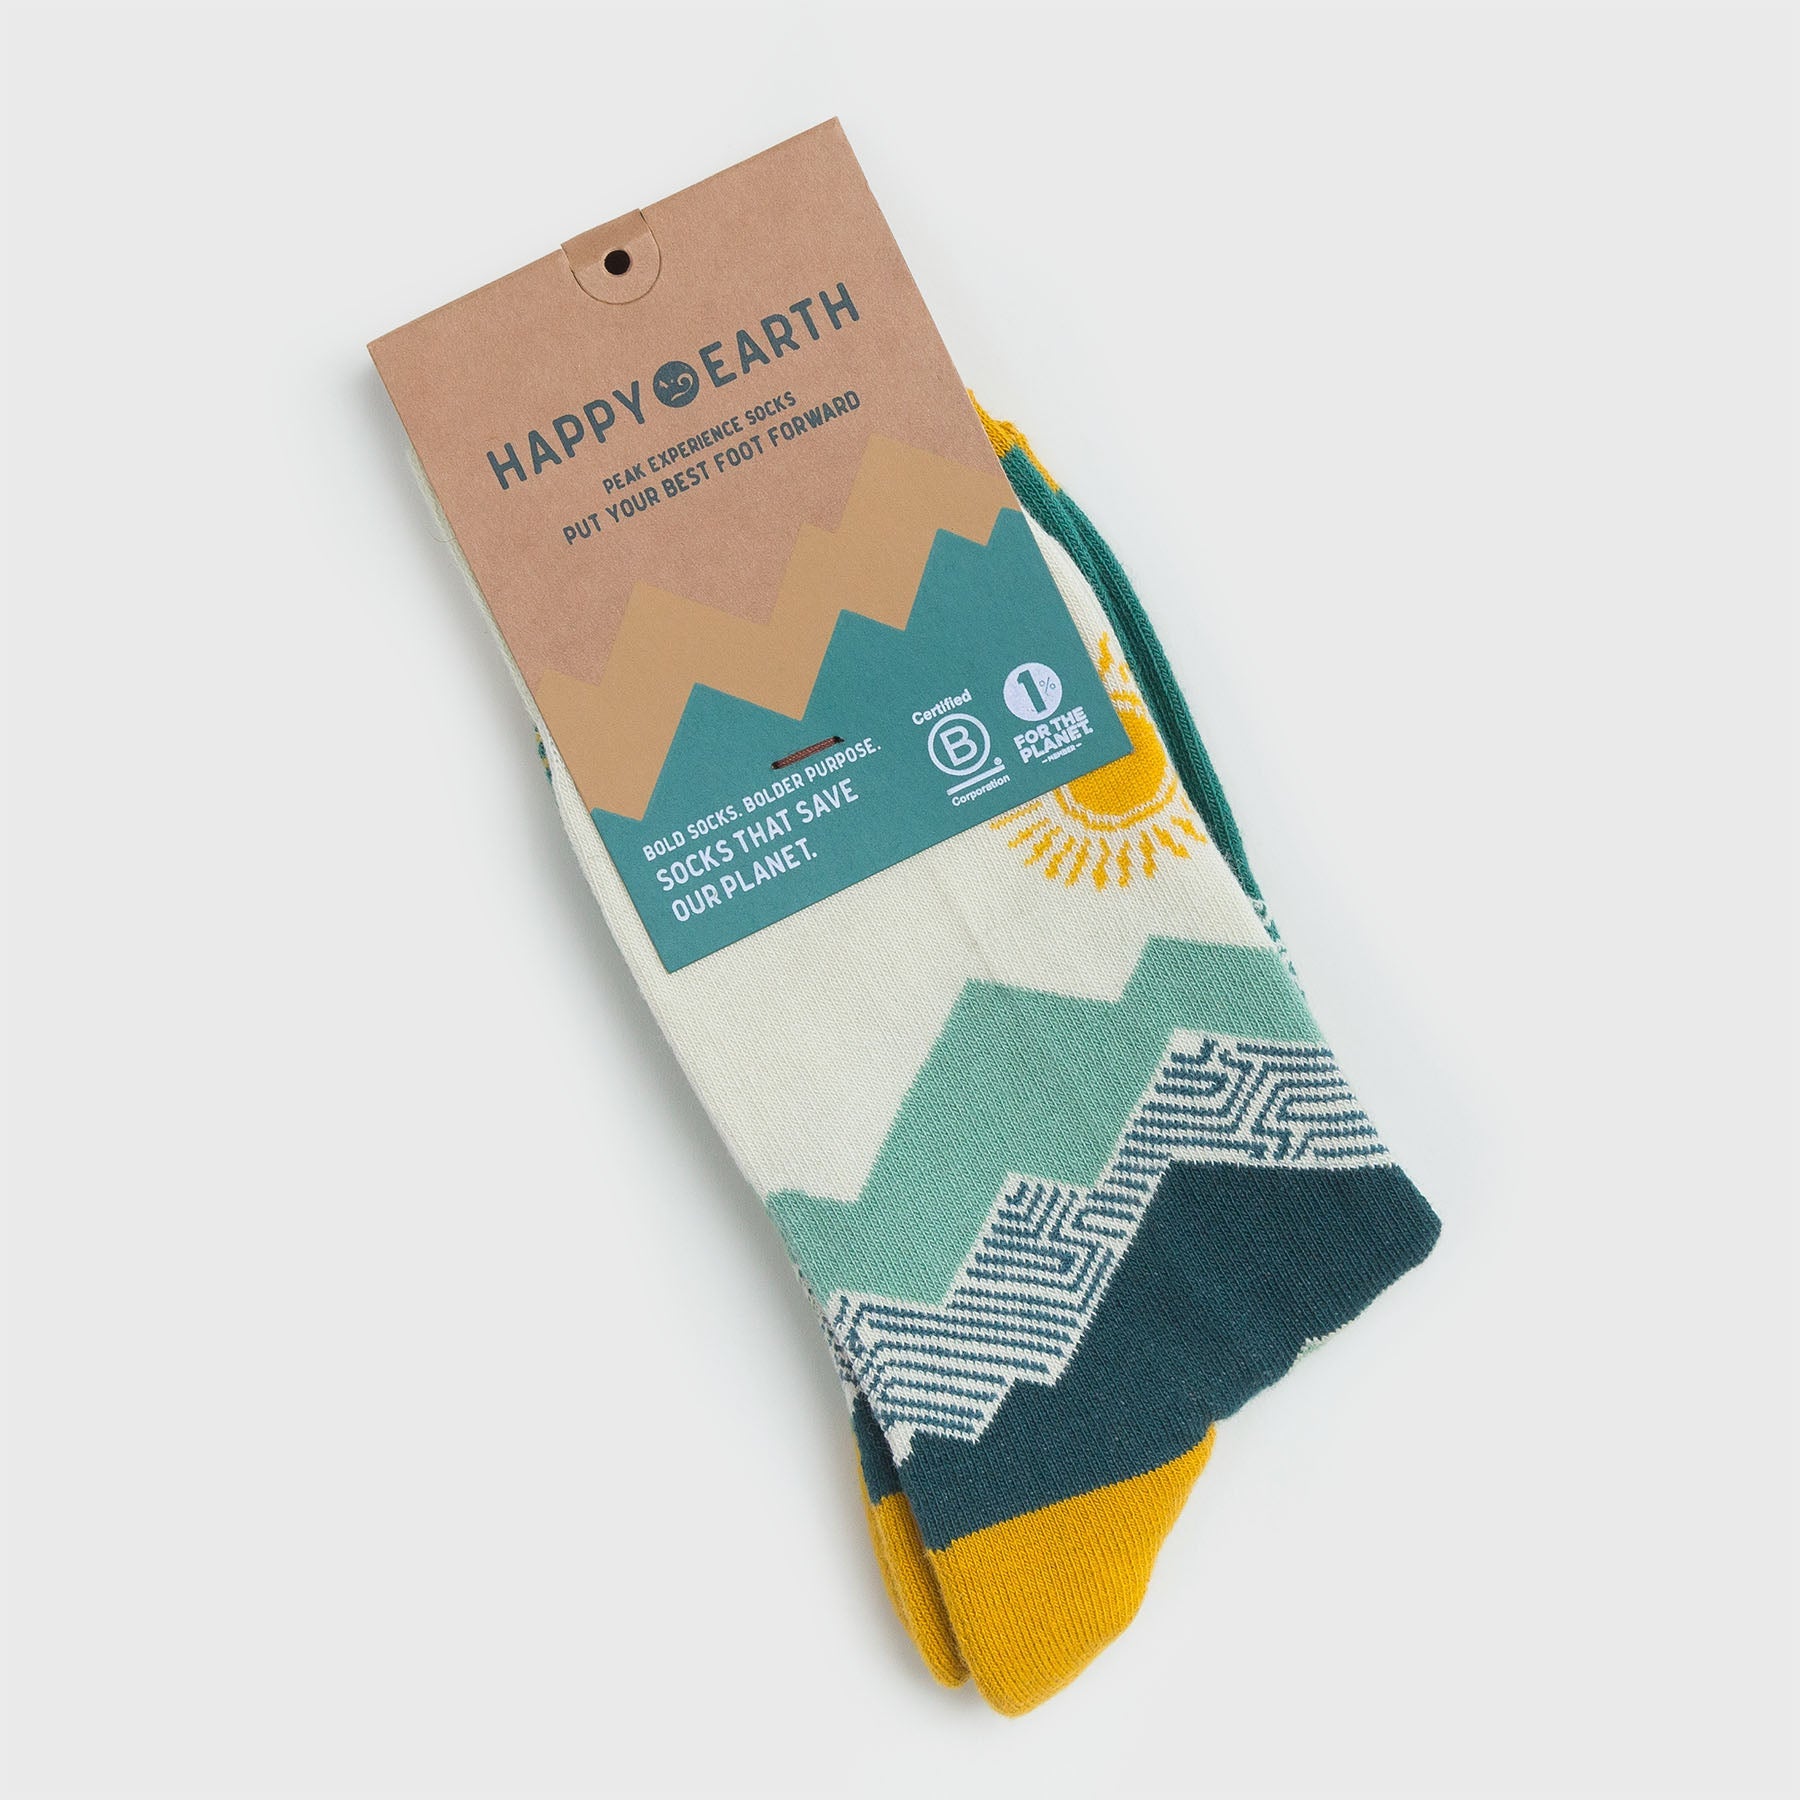 Peak Experience Socks by Happy Earth